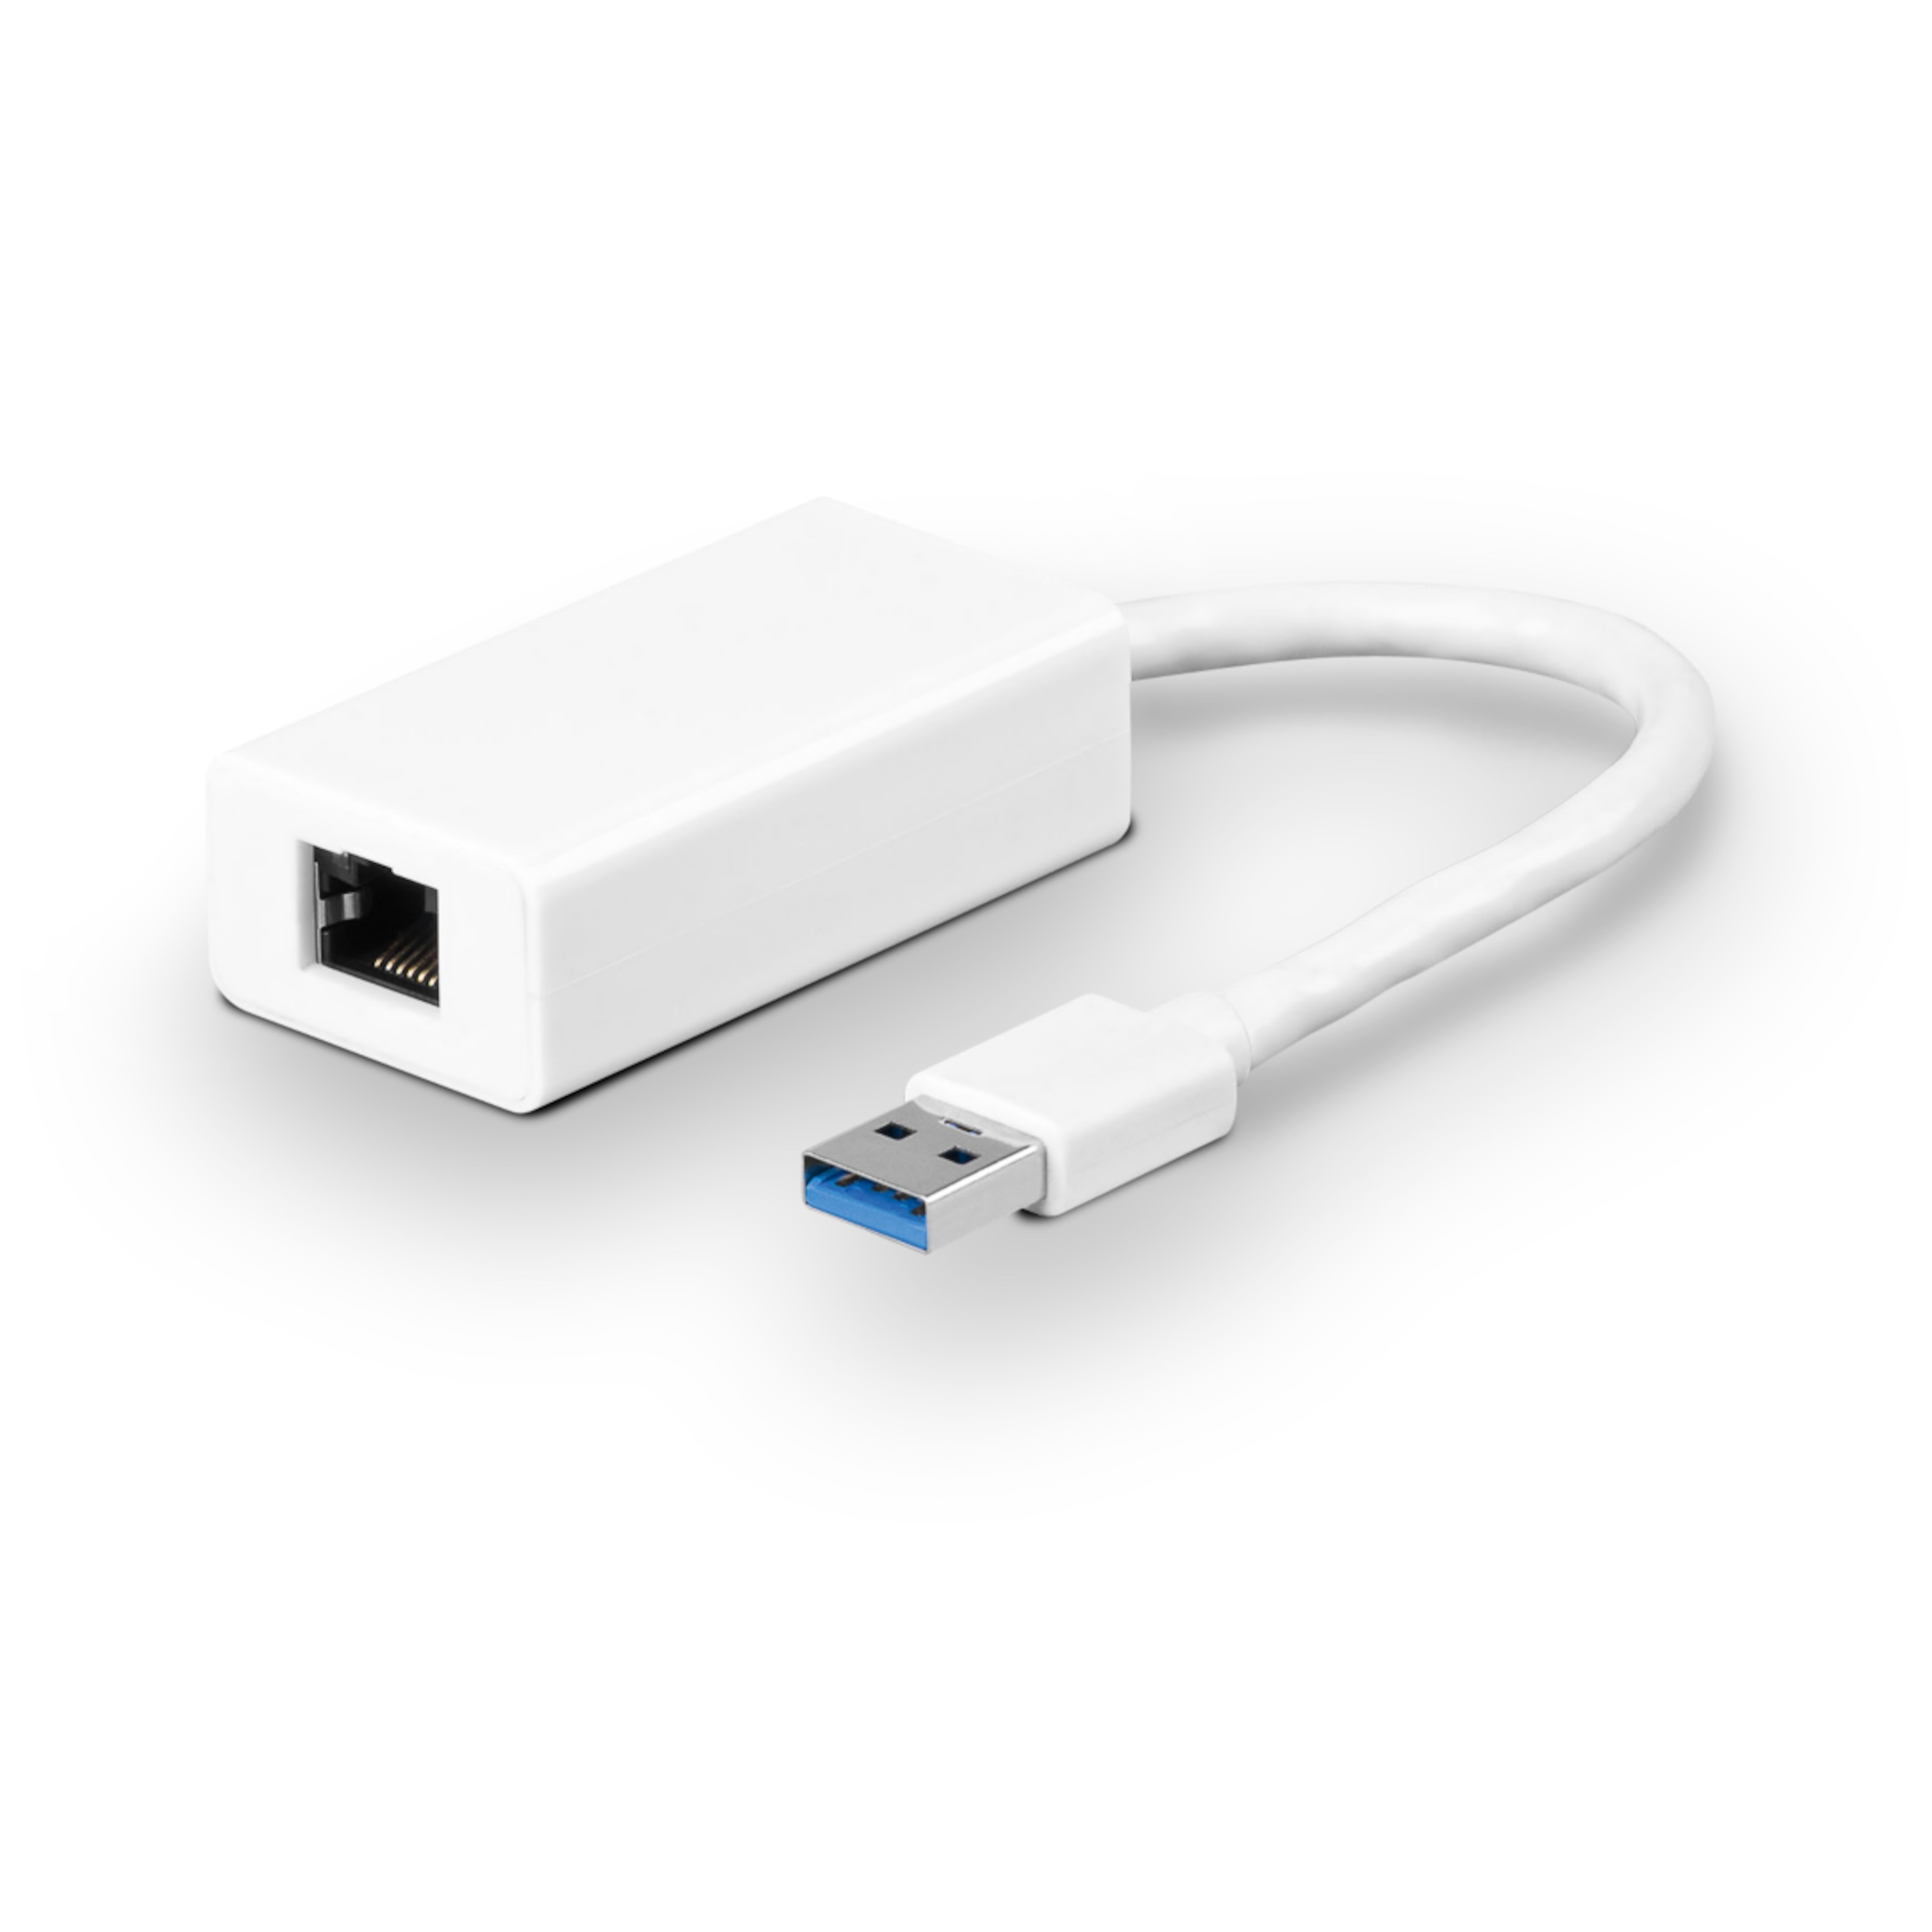 WENTRONIC USB 3.0 zu Gigabit-LAN Adapter, Stromversorgung über USB-Port, Plug & Play